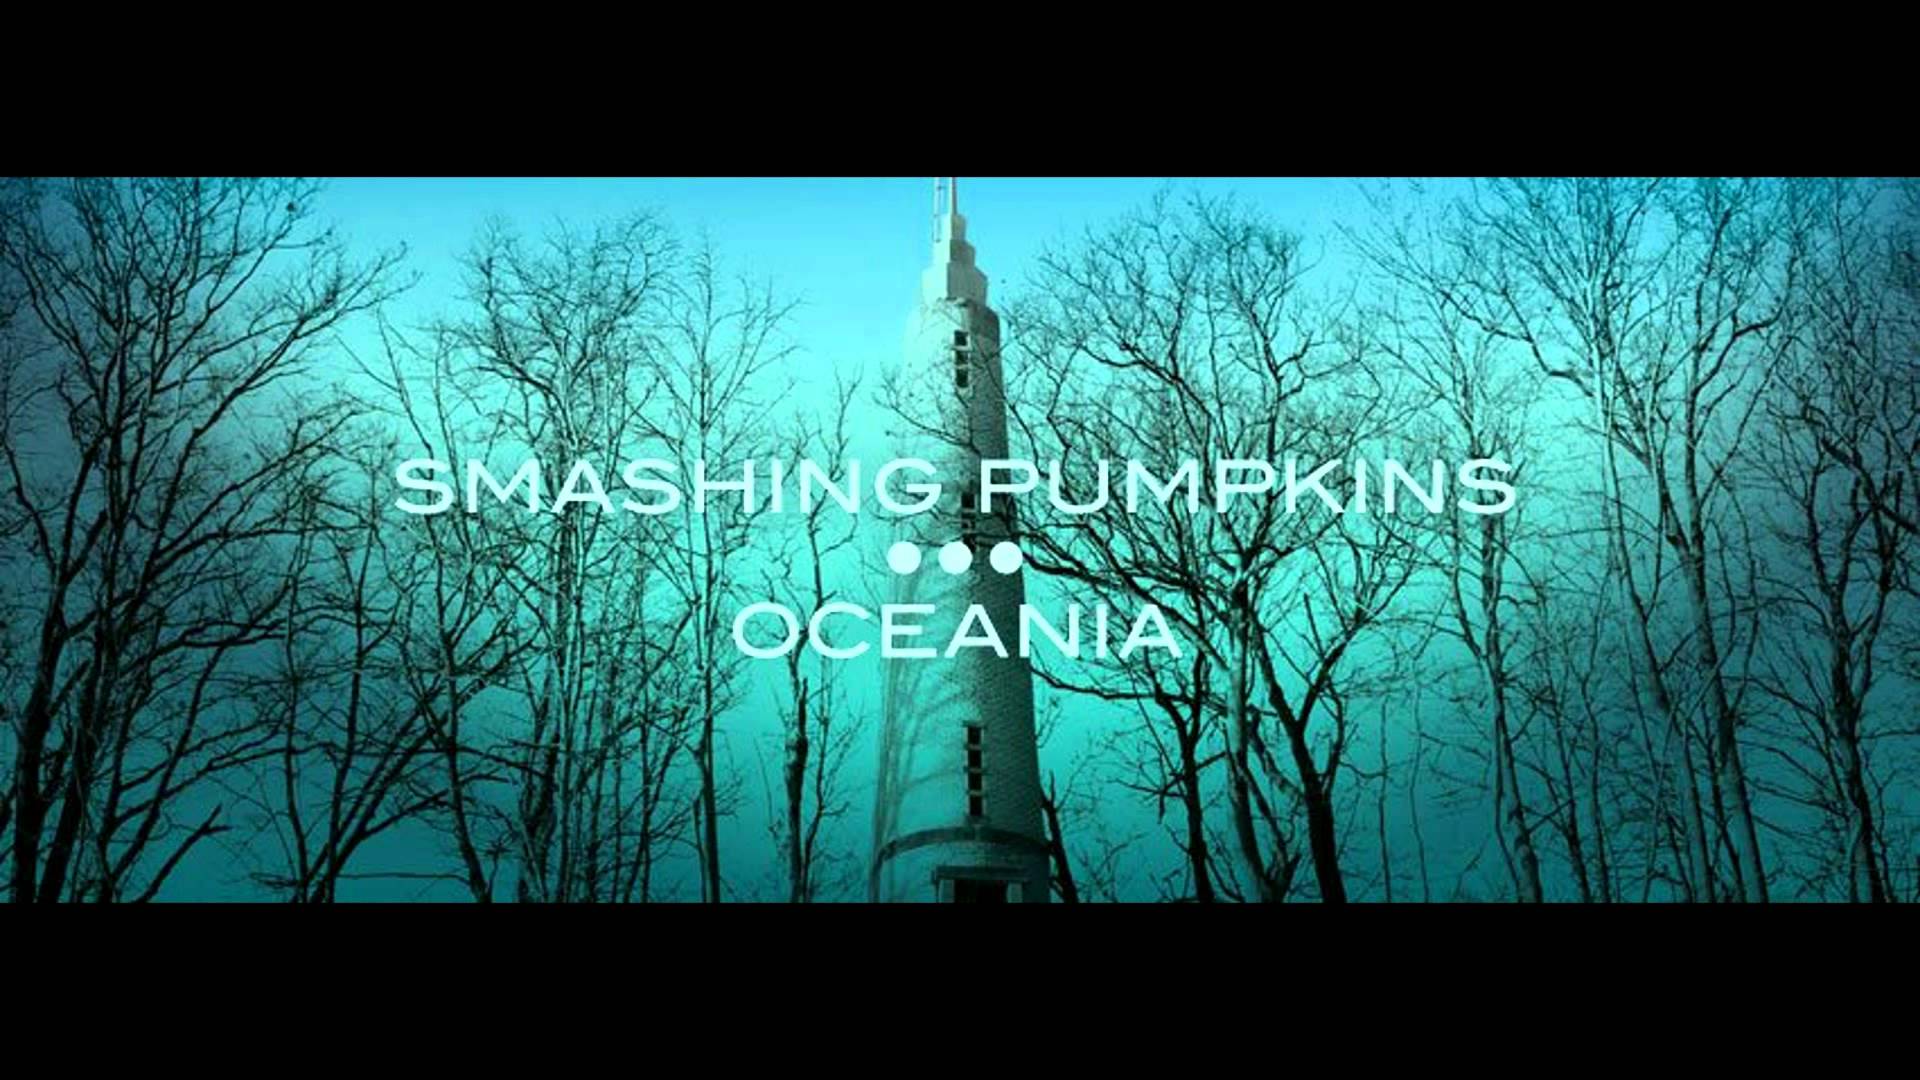 The Smashing Pumpkins - Oceania (2012) - Album Review [HD] - YouTube